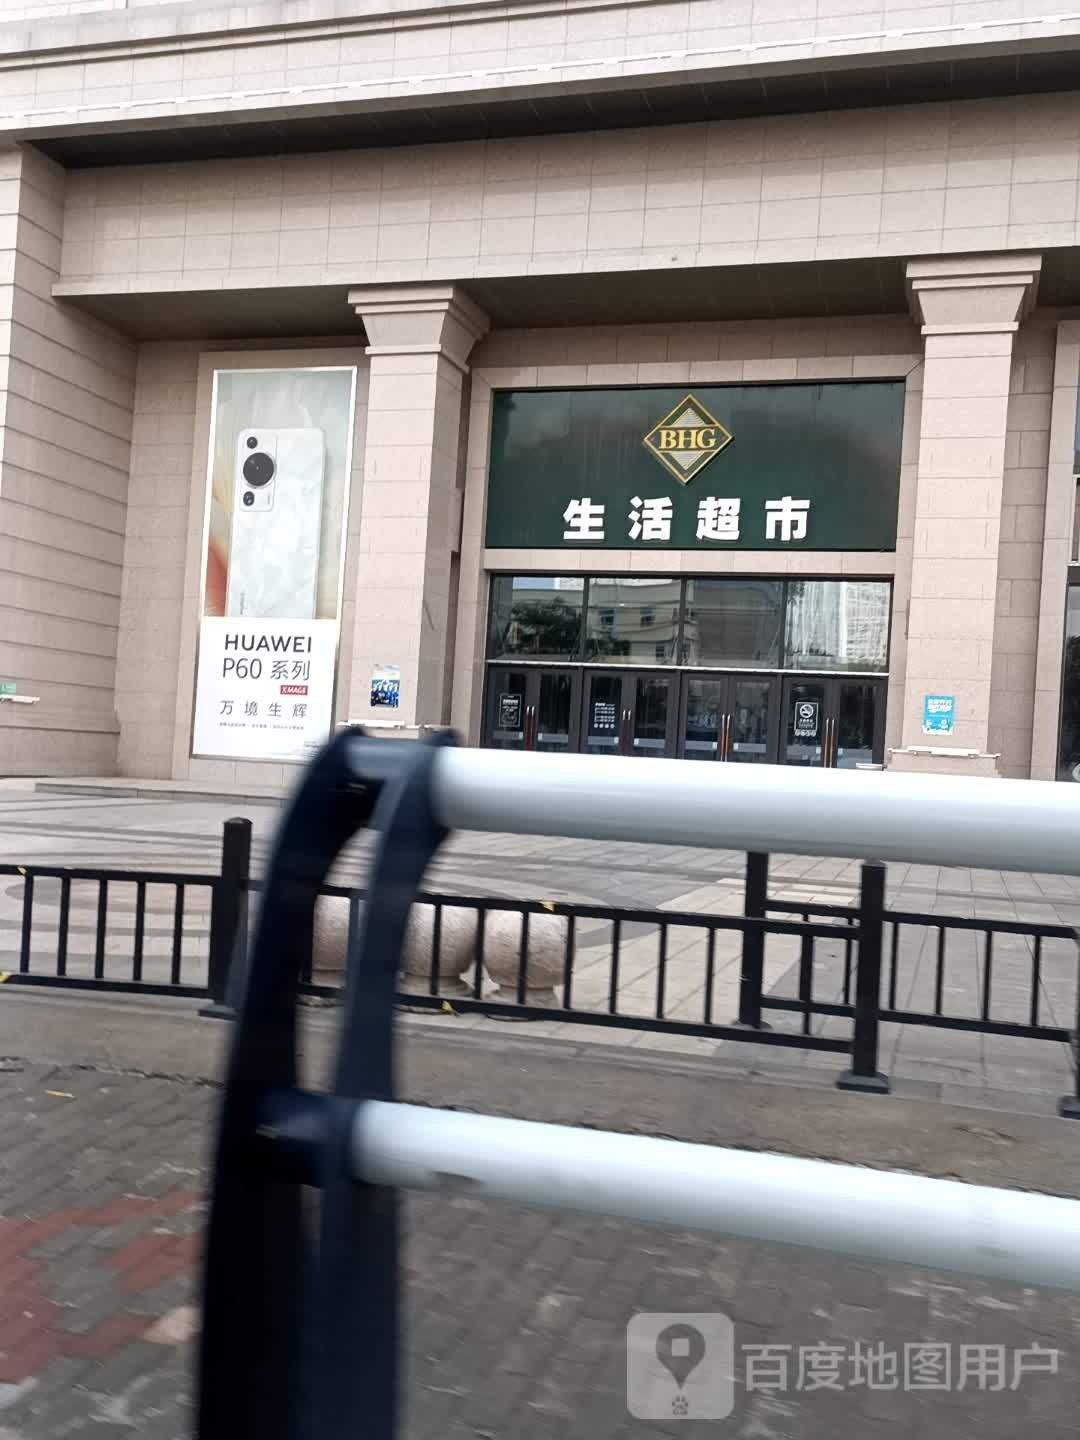 BHG Mall北京华联包头购物中心(钢铁大街店)